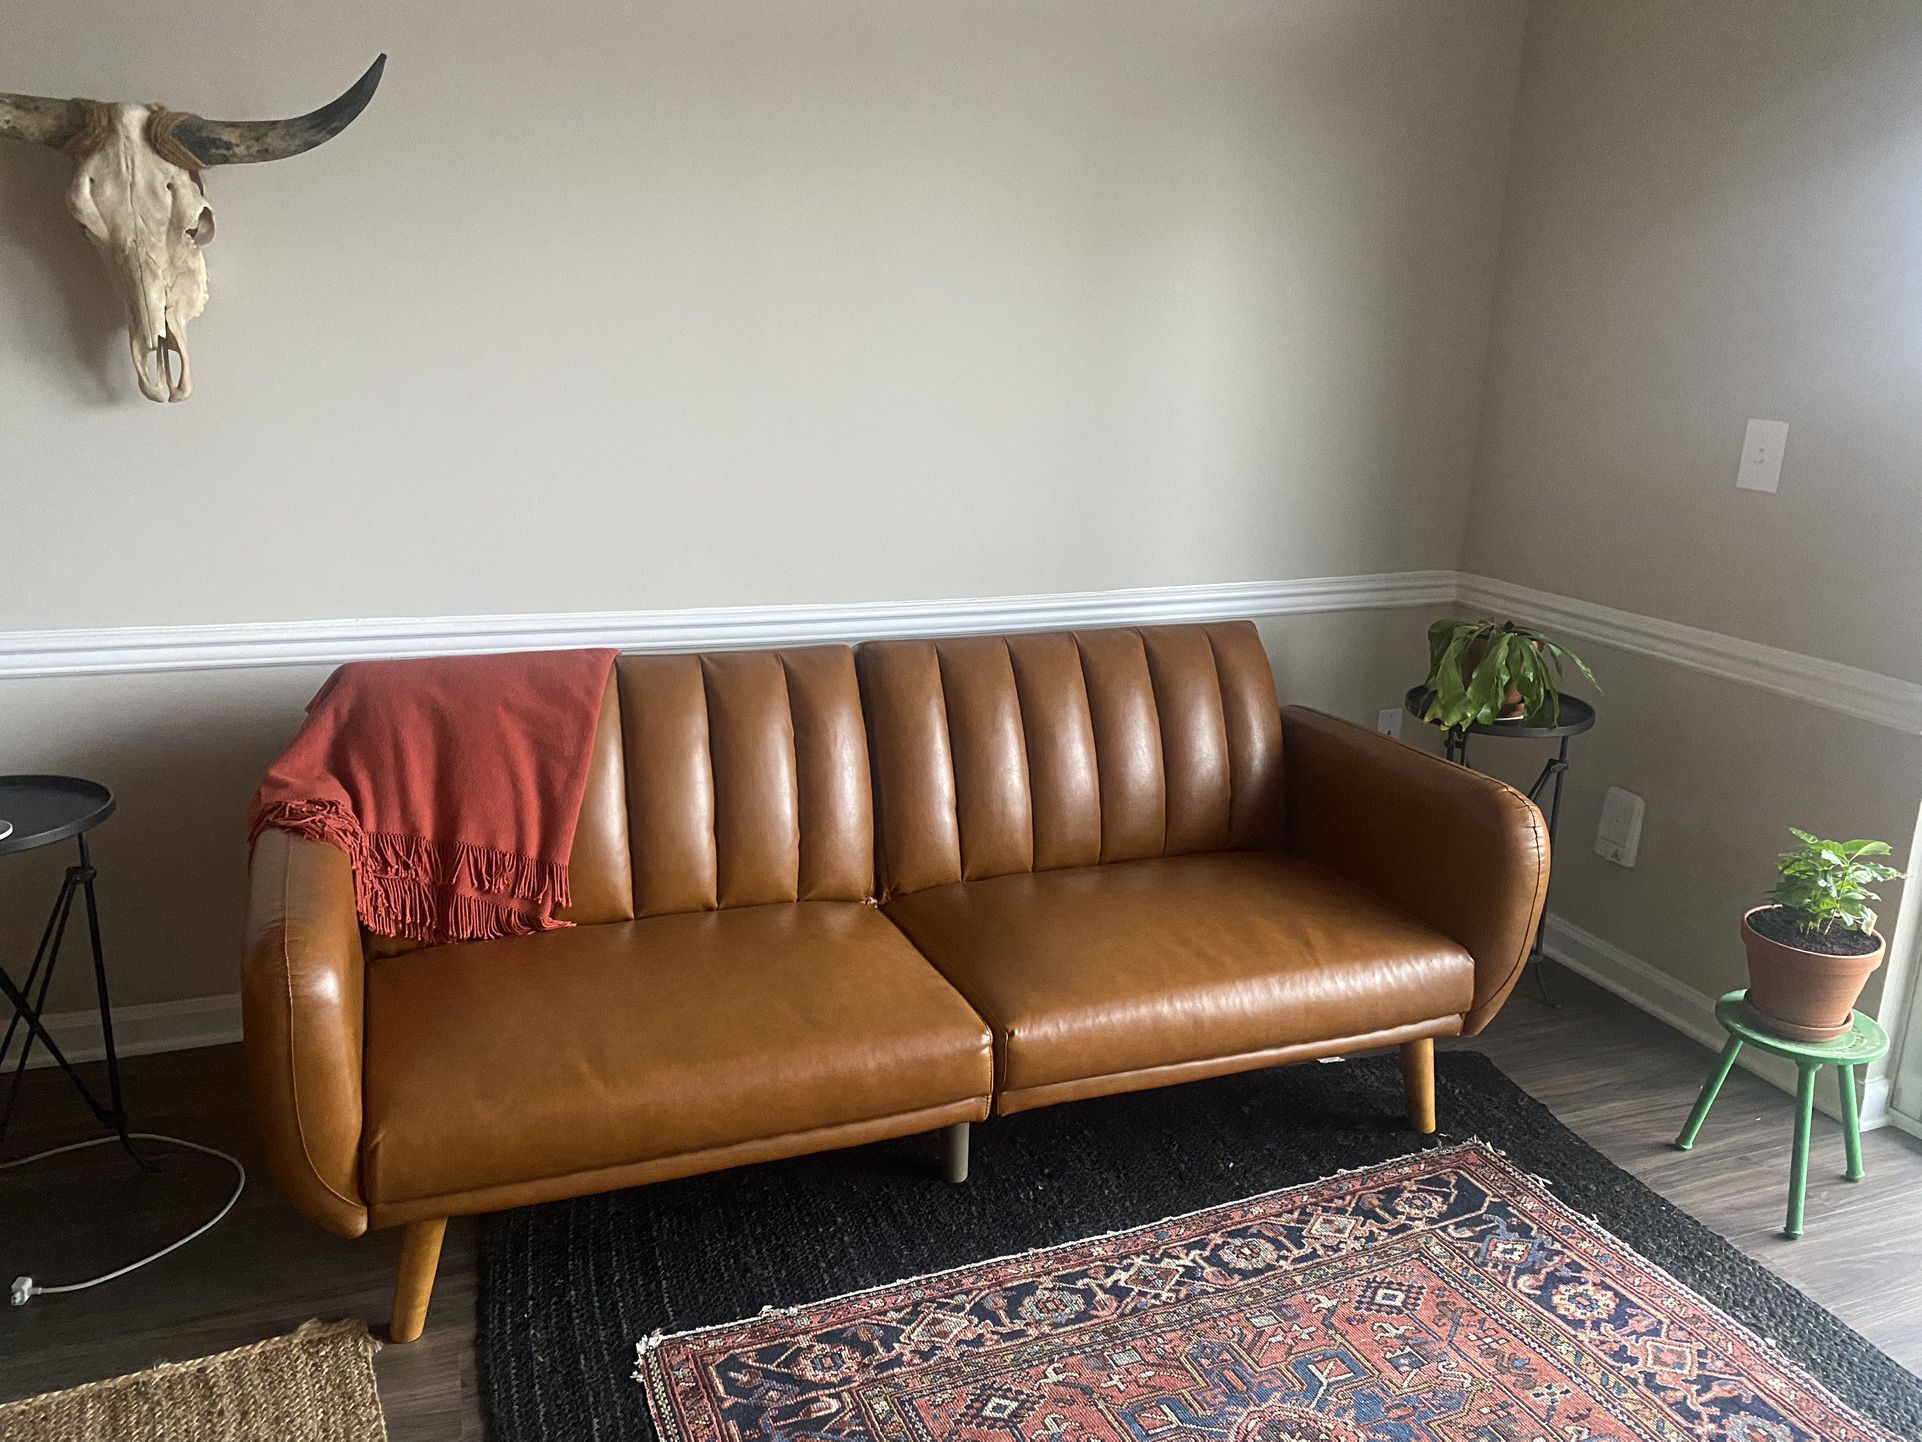 Faux Leather Futon / Sleeper Sofa